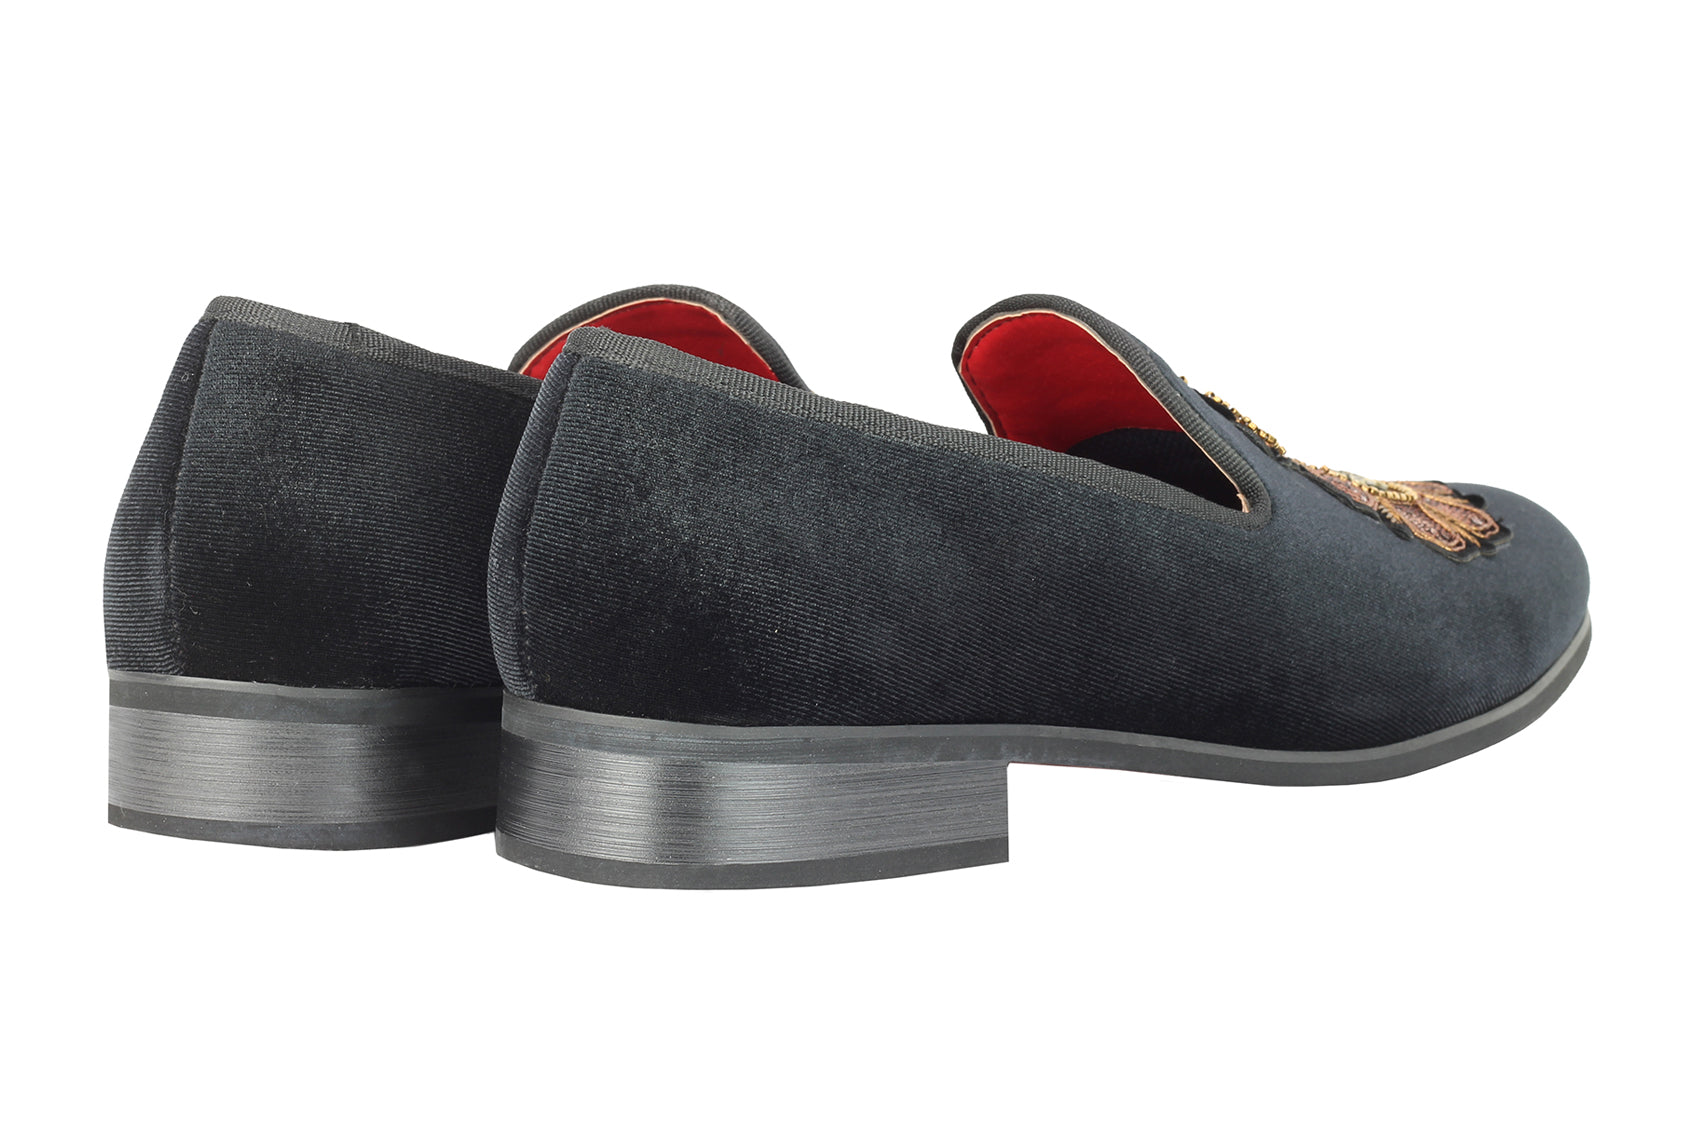 Mens Velvet Loafers Bee Crown Embroidered Vintage Dress Shoes Slip On Slippers Black